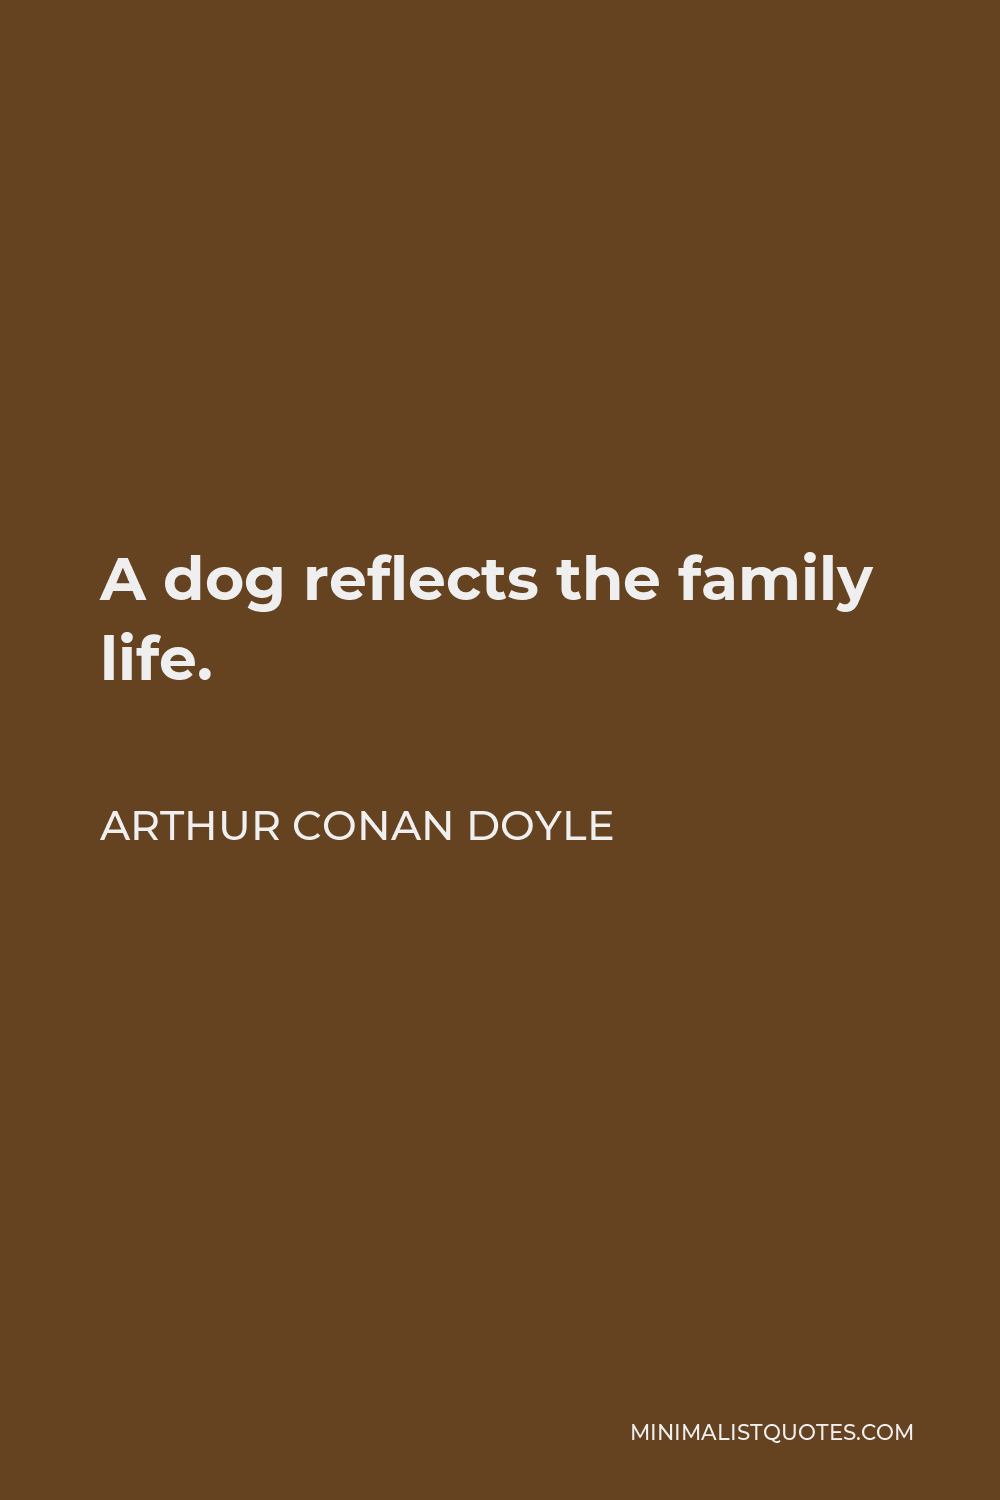 Arthur Conan Doyle Quote - A dog reflects the family life.